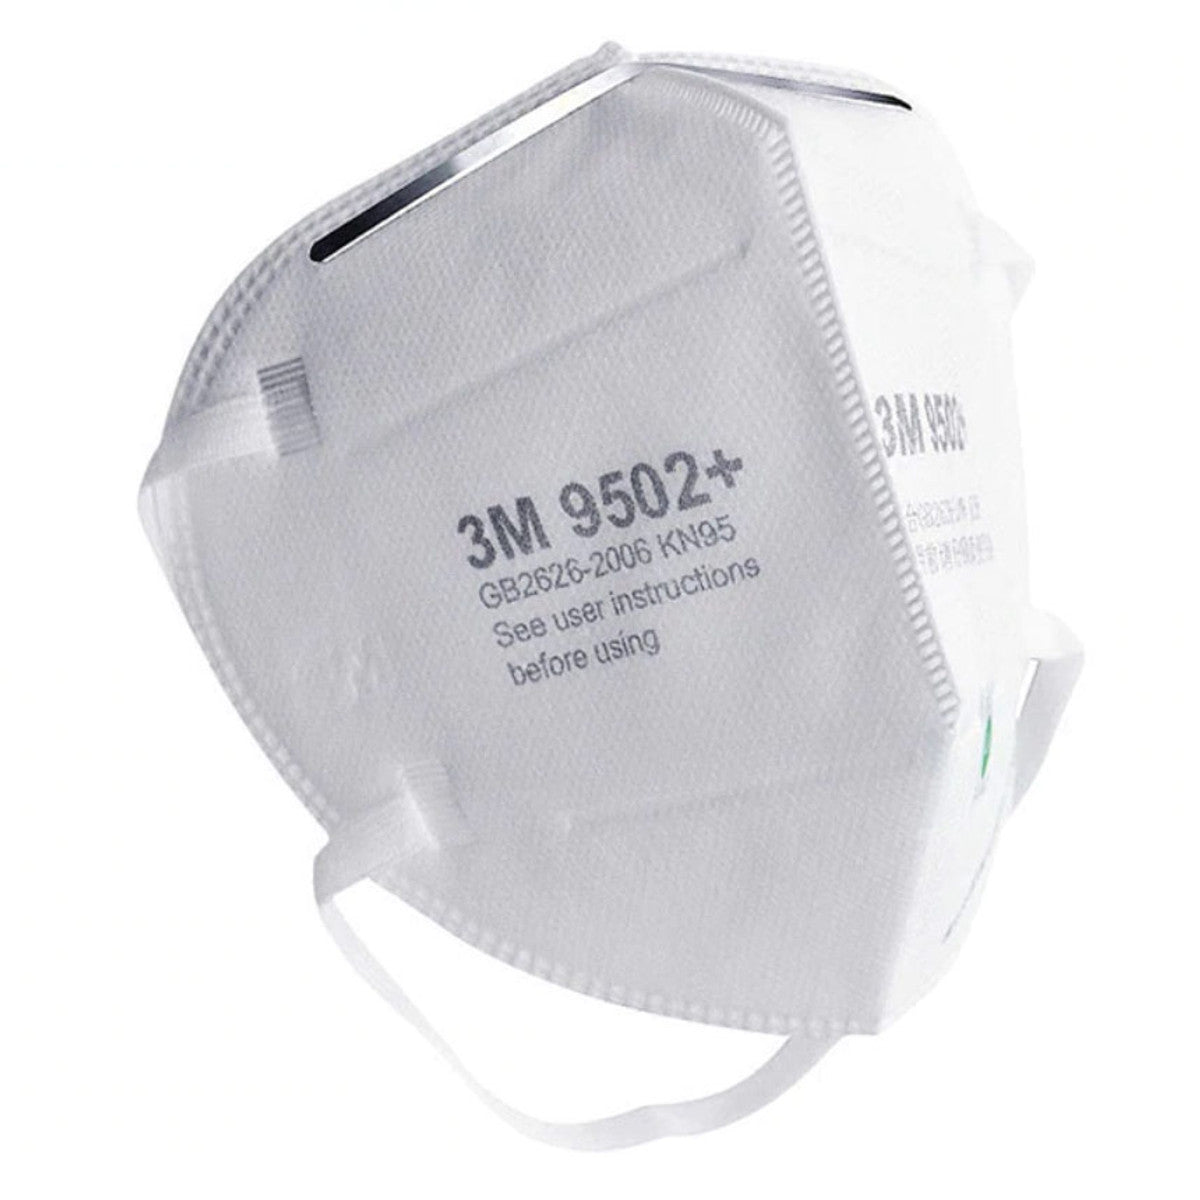 3M™ Particulate Respirator 9502+ N95 Mask 500/CS